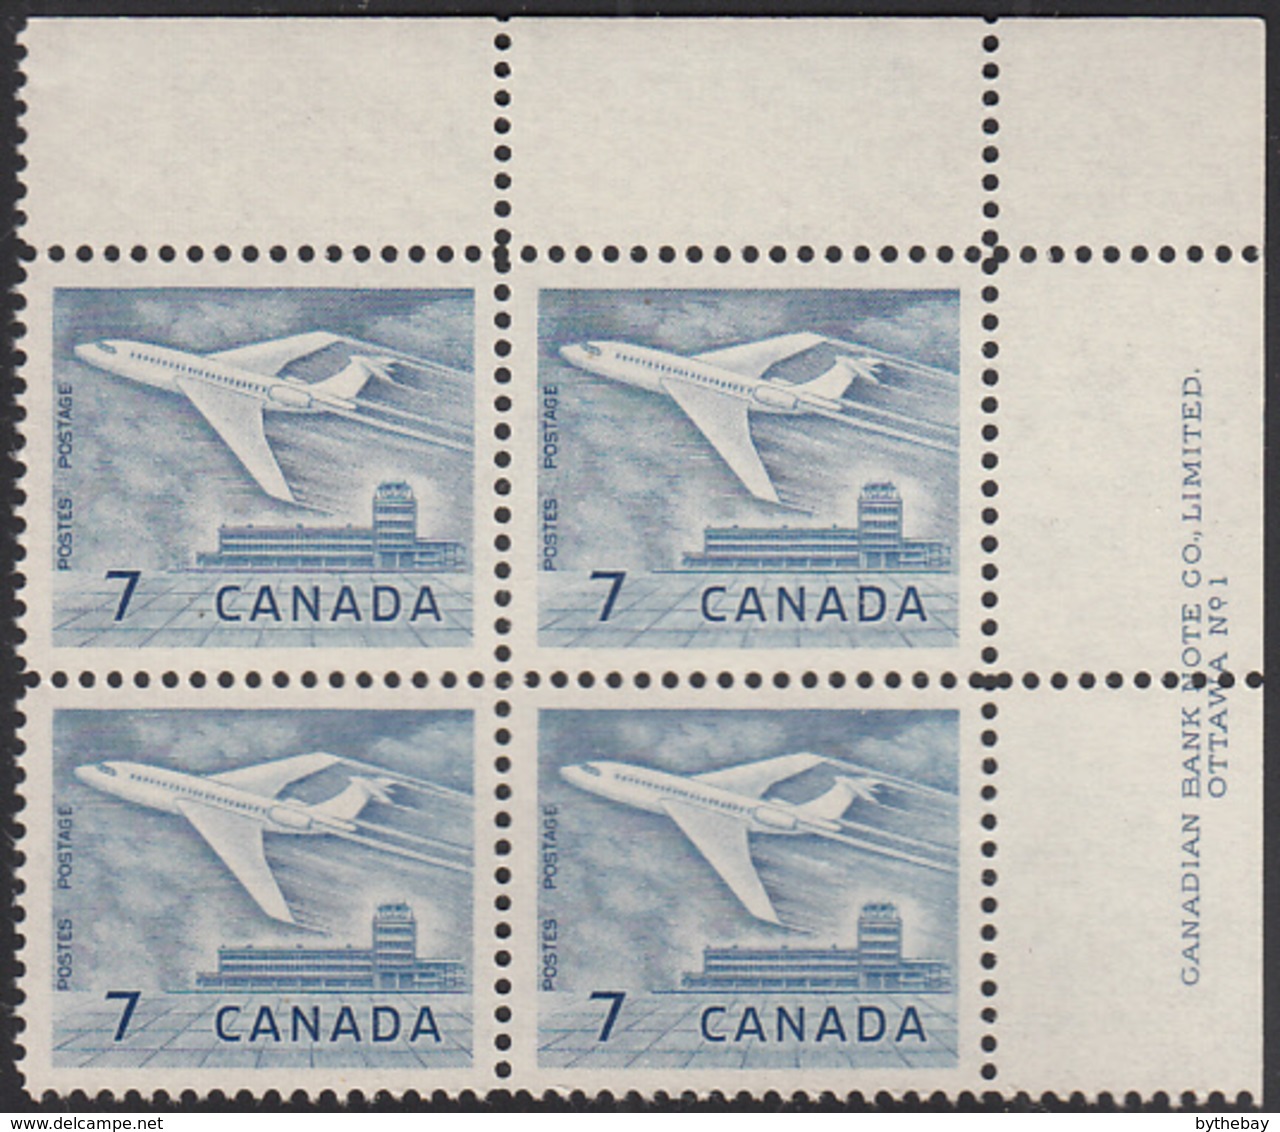 Canada 1964 MNH Sc #414 7c Jet Plane, Ottawa Plate #1 UR - Num. Planches & Inscriptions Marge